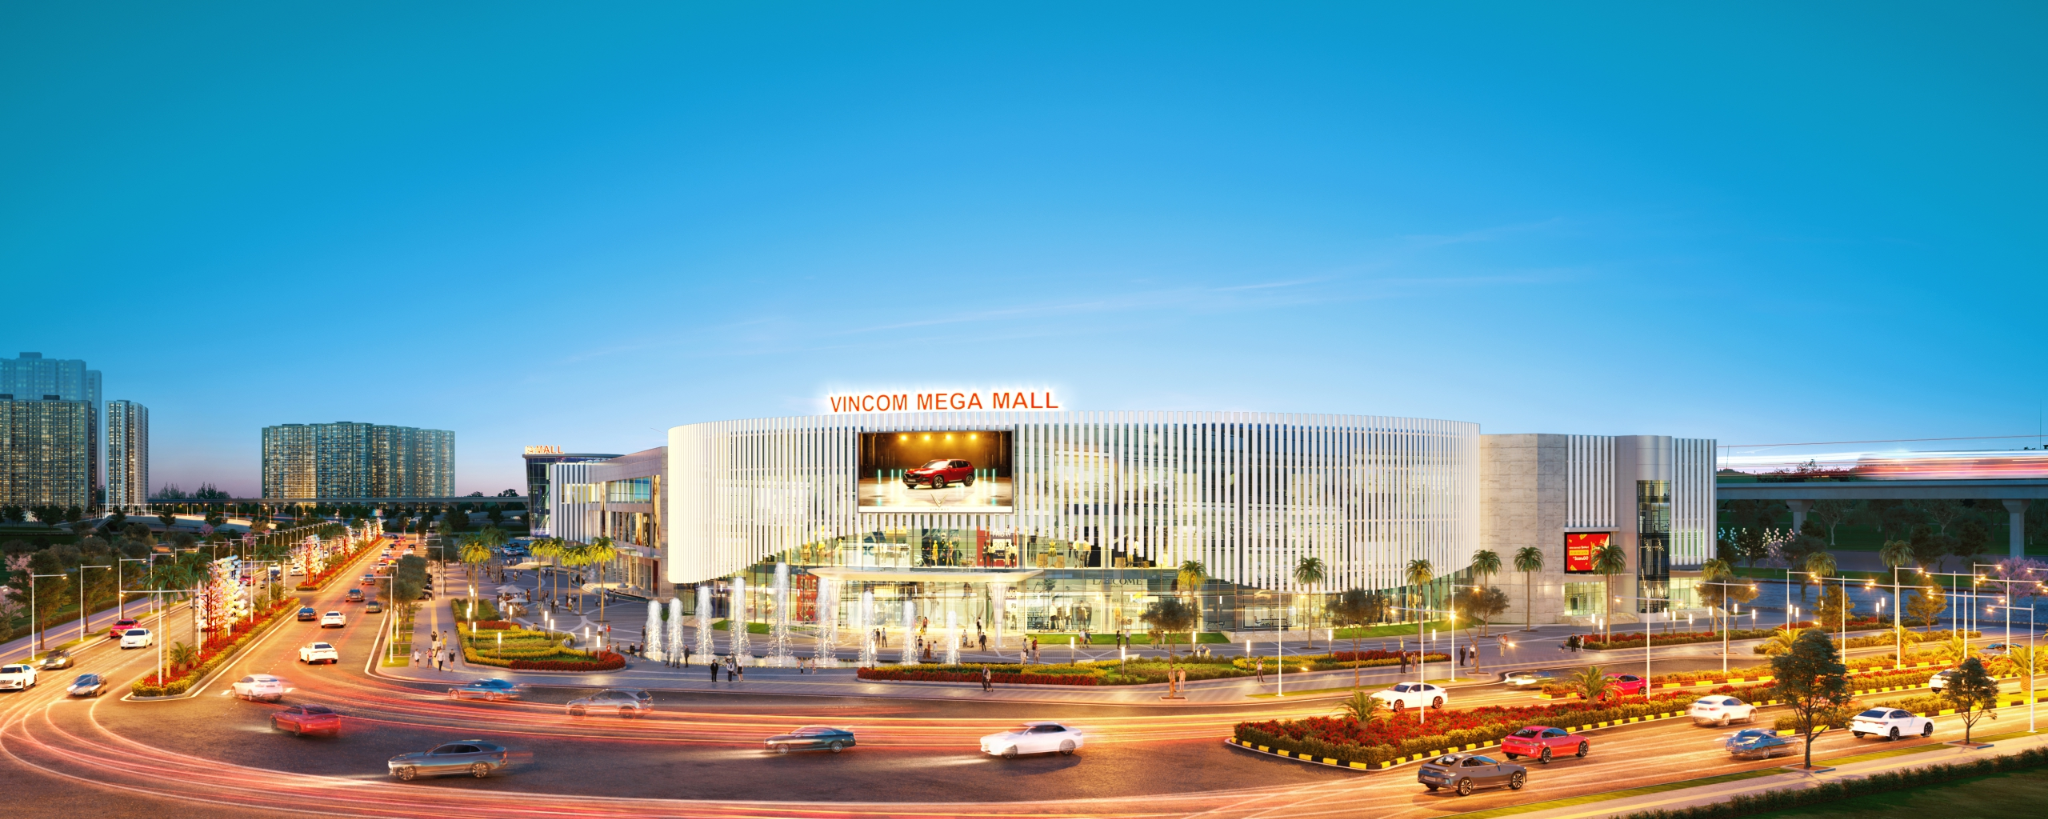 khong-gian-vui-choi-ngay-he-cho-tre-ngay-tai-vincom-mega-mall-smart-city-onehousing-2